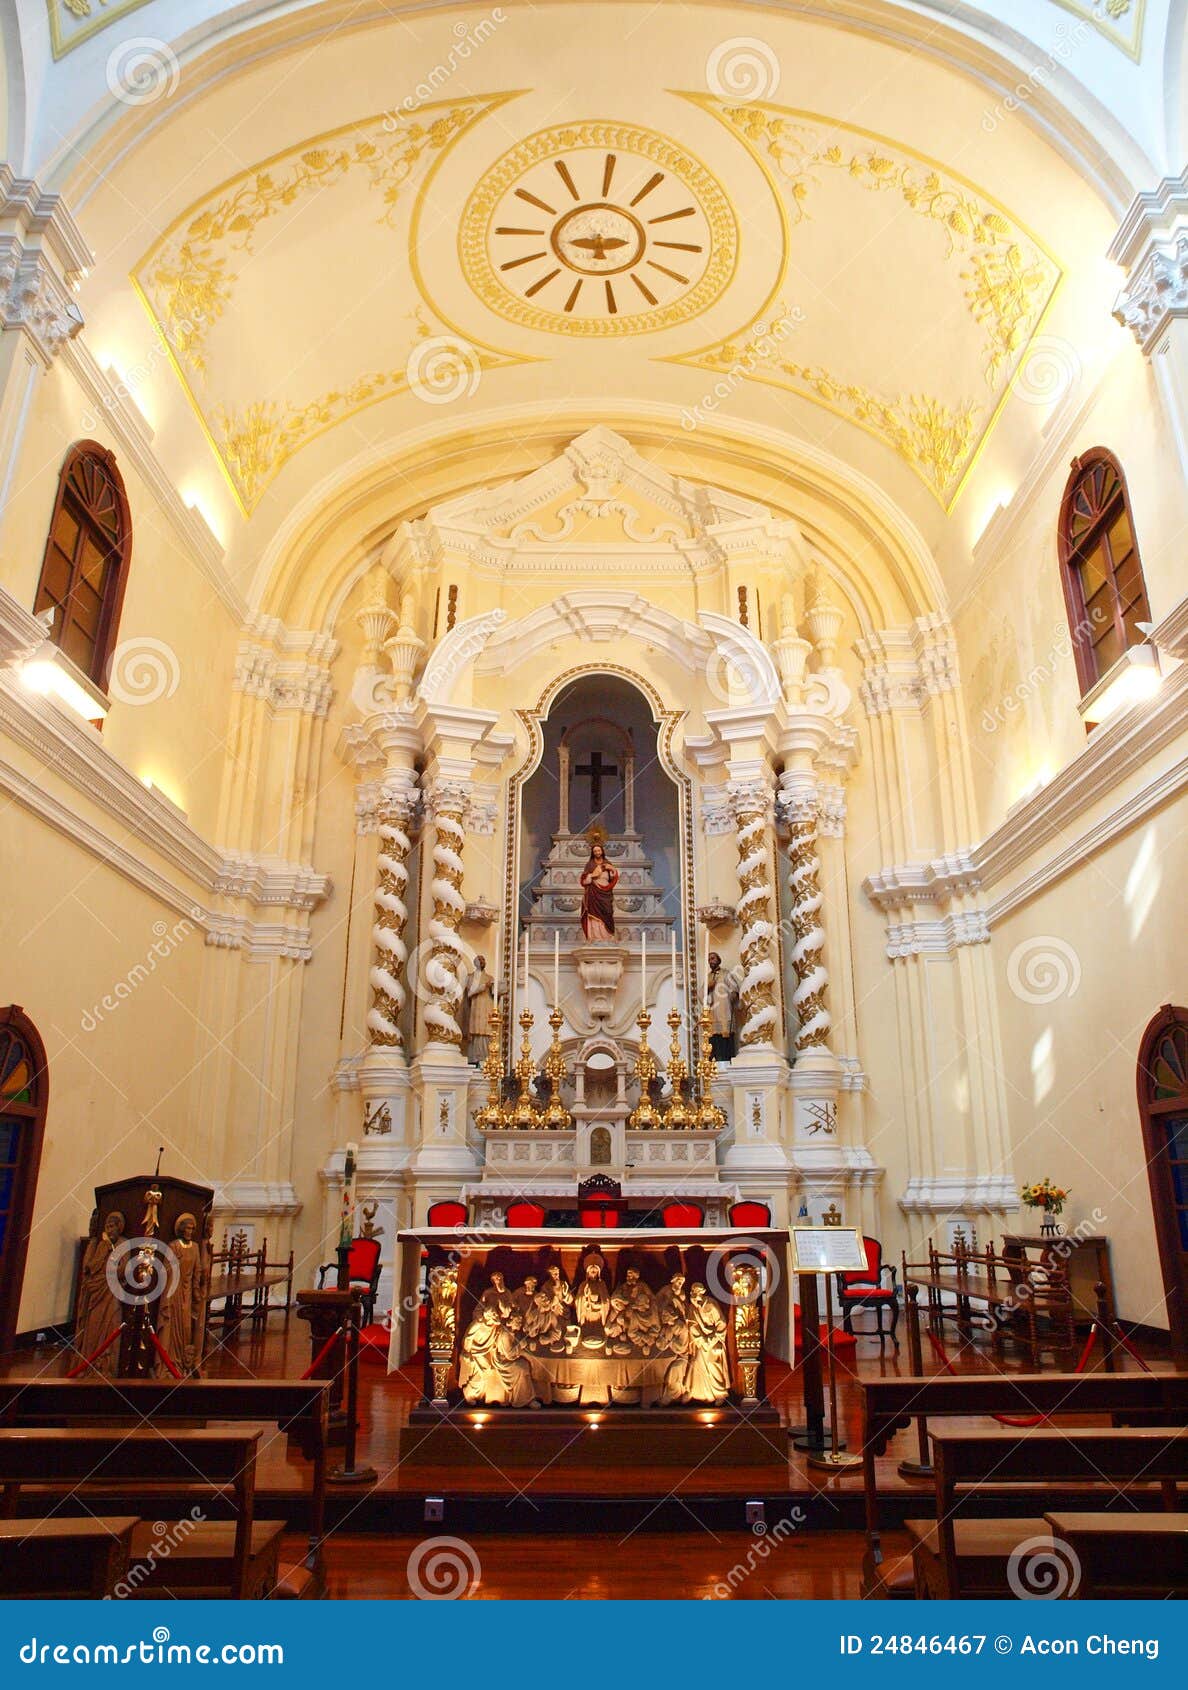 st. joseph's seminary and church in macao